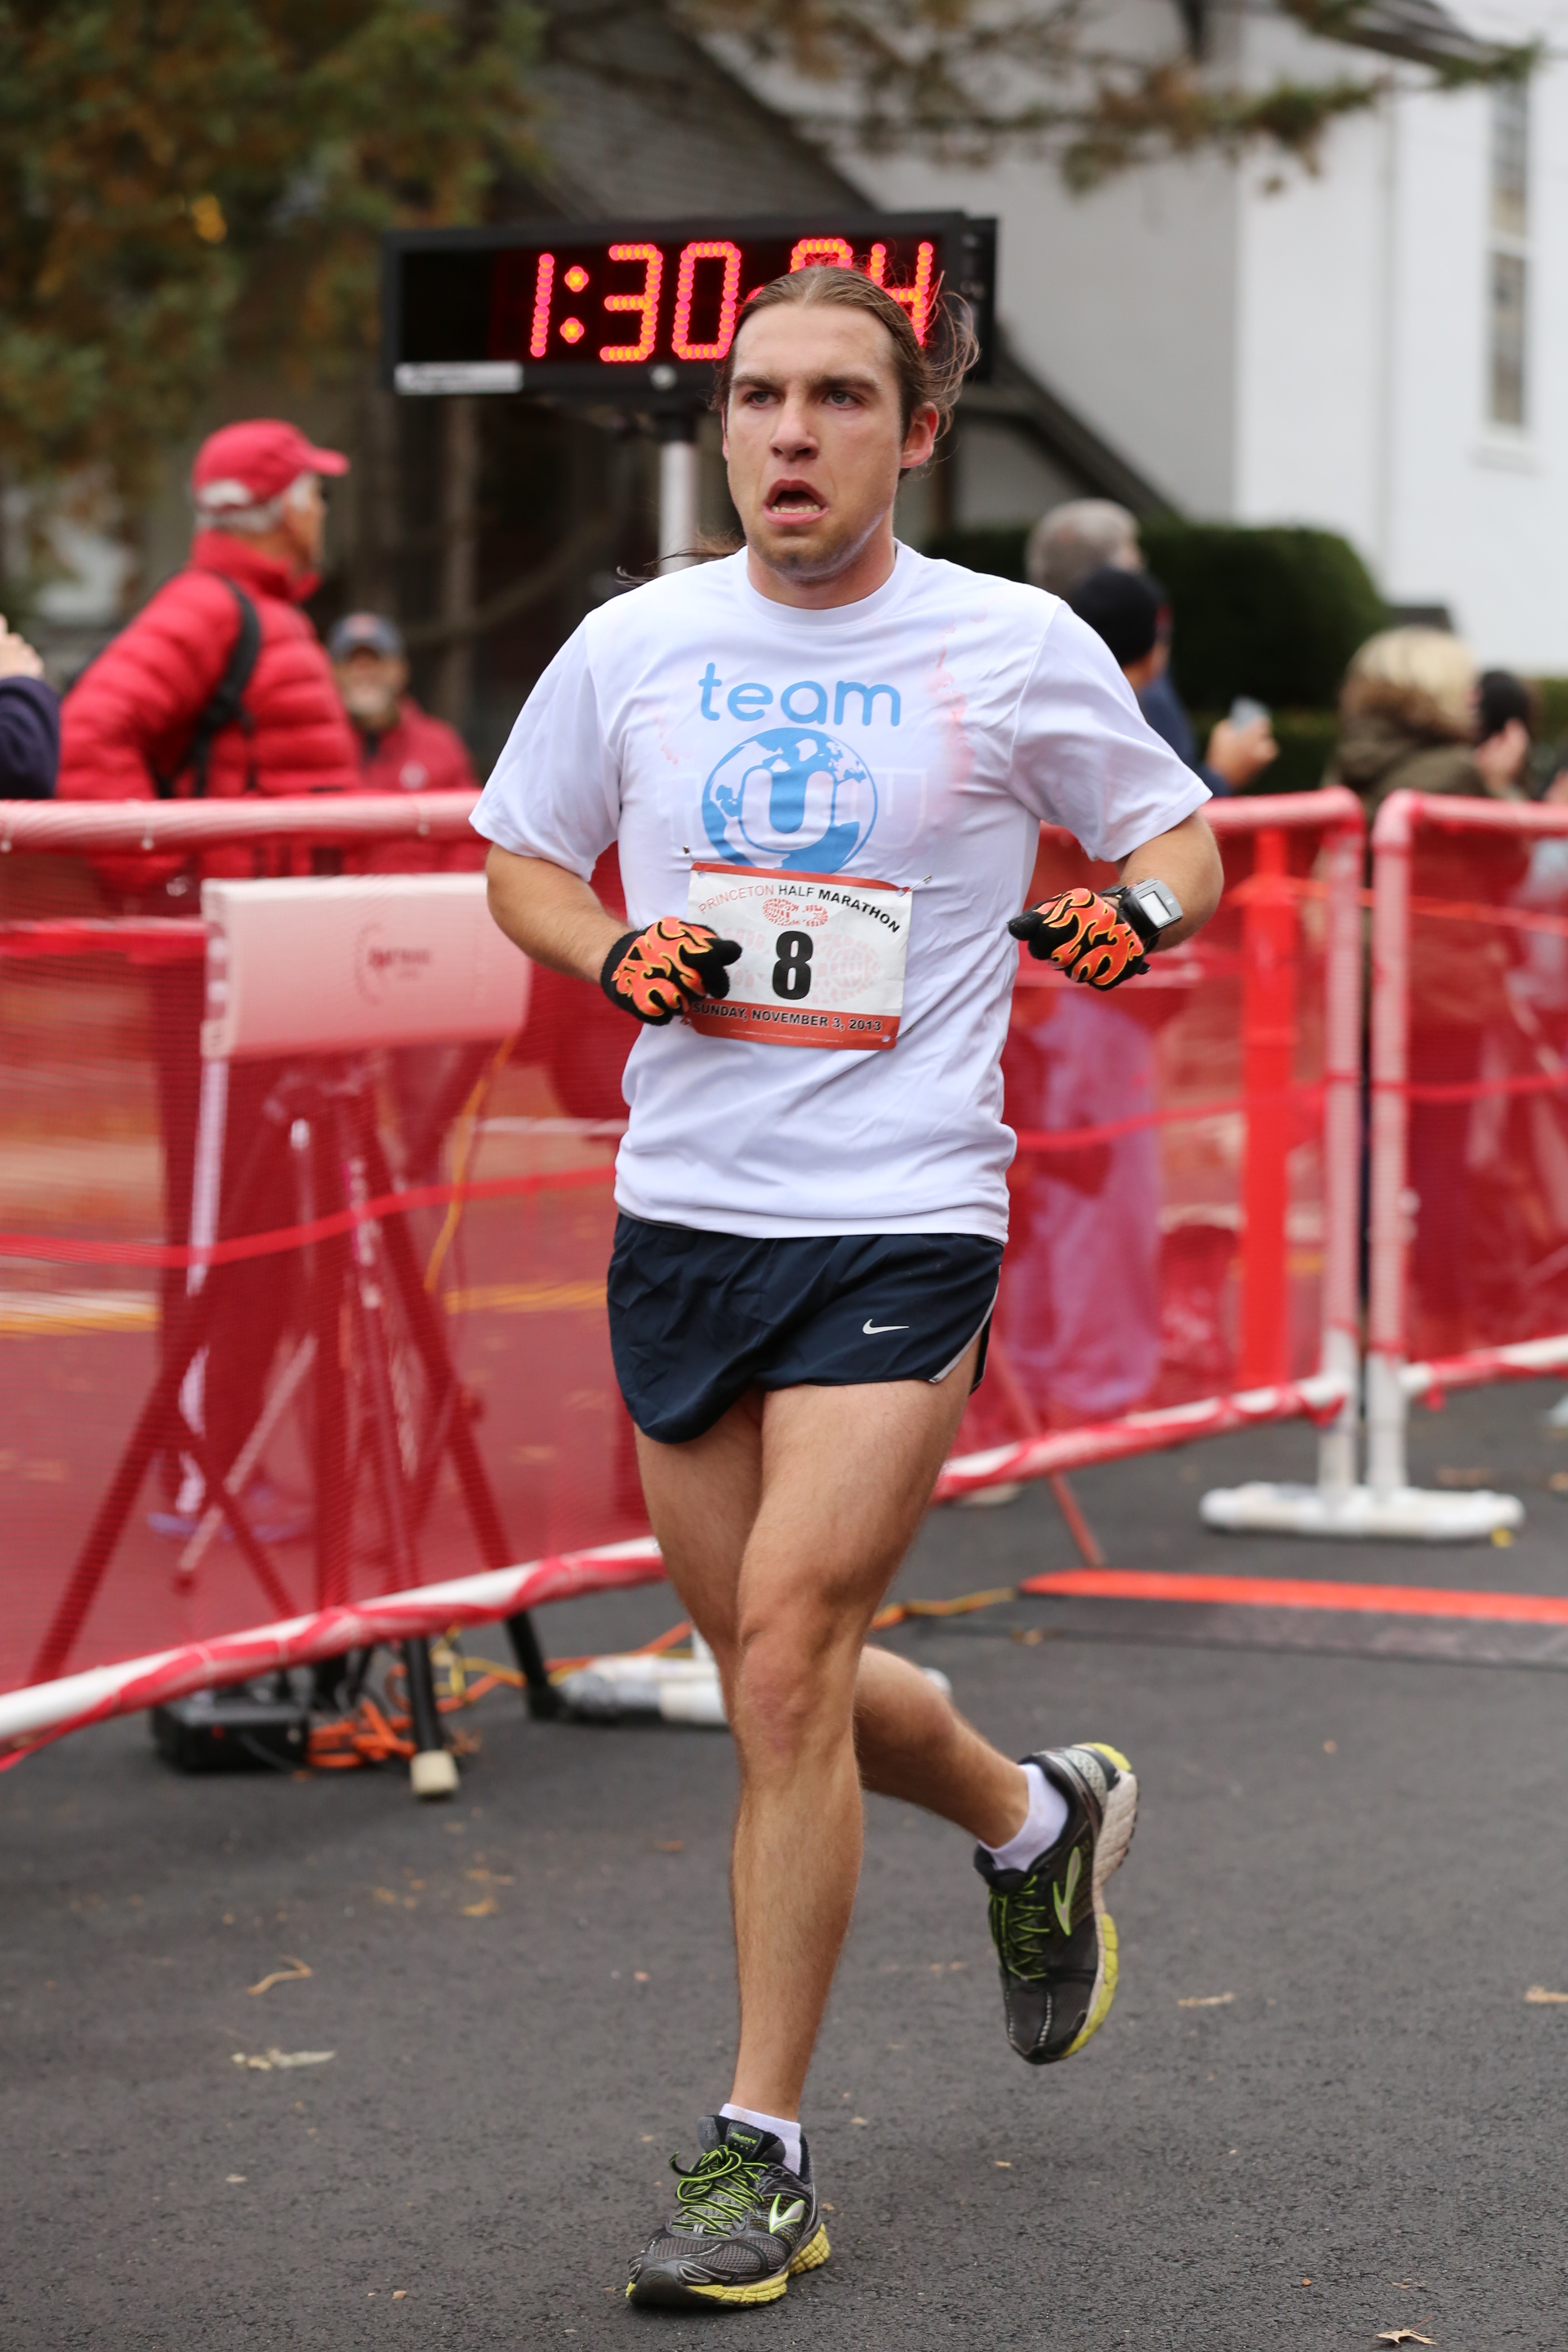 Finishing the 2013 Princeton Half Marathon